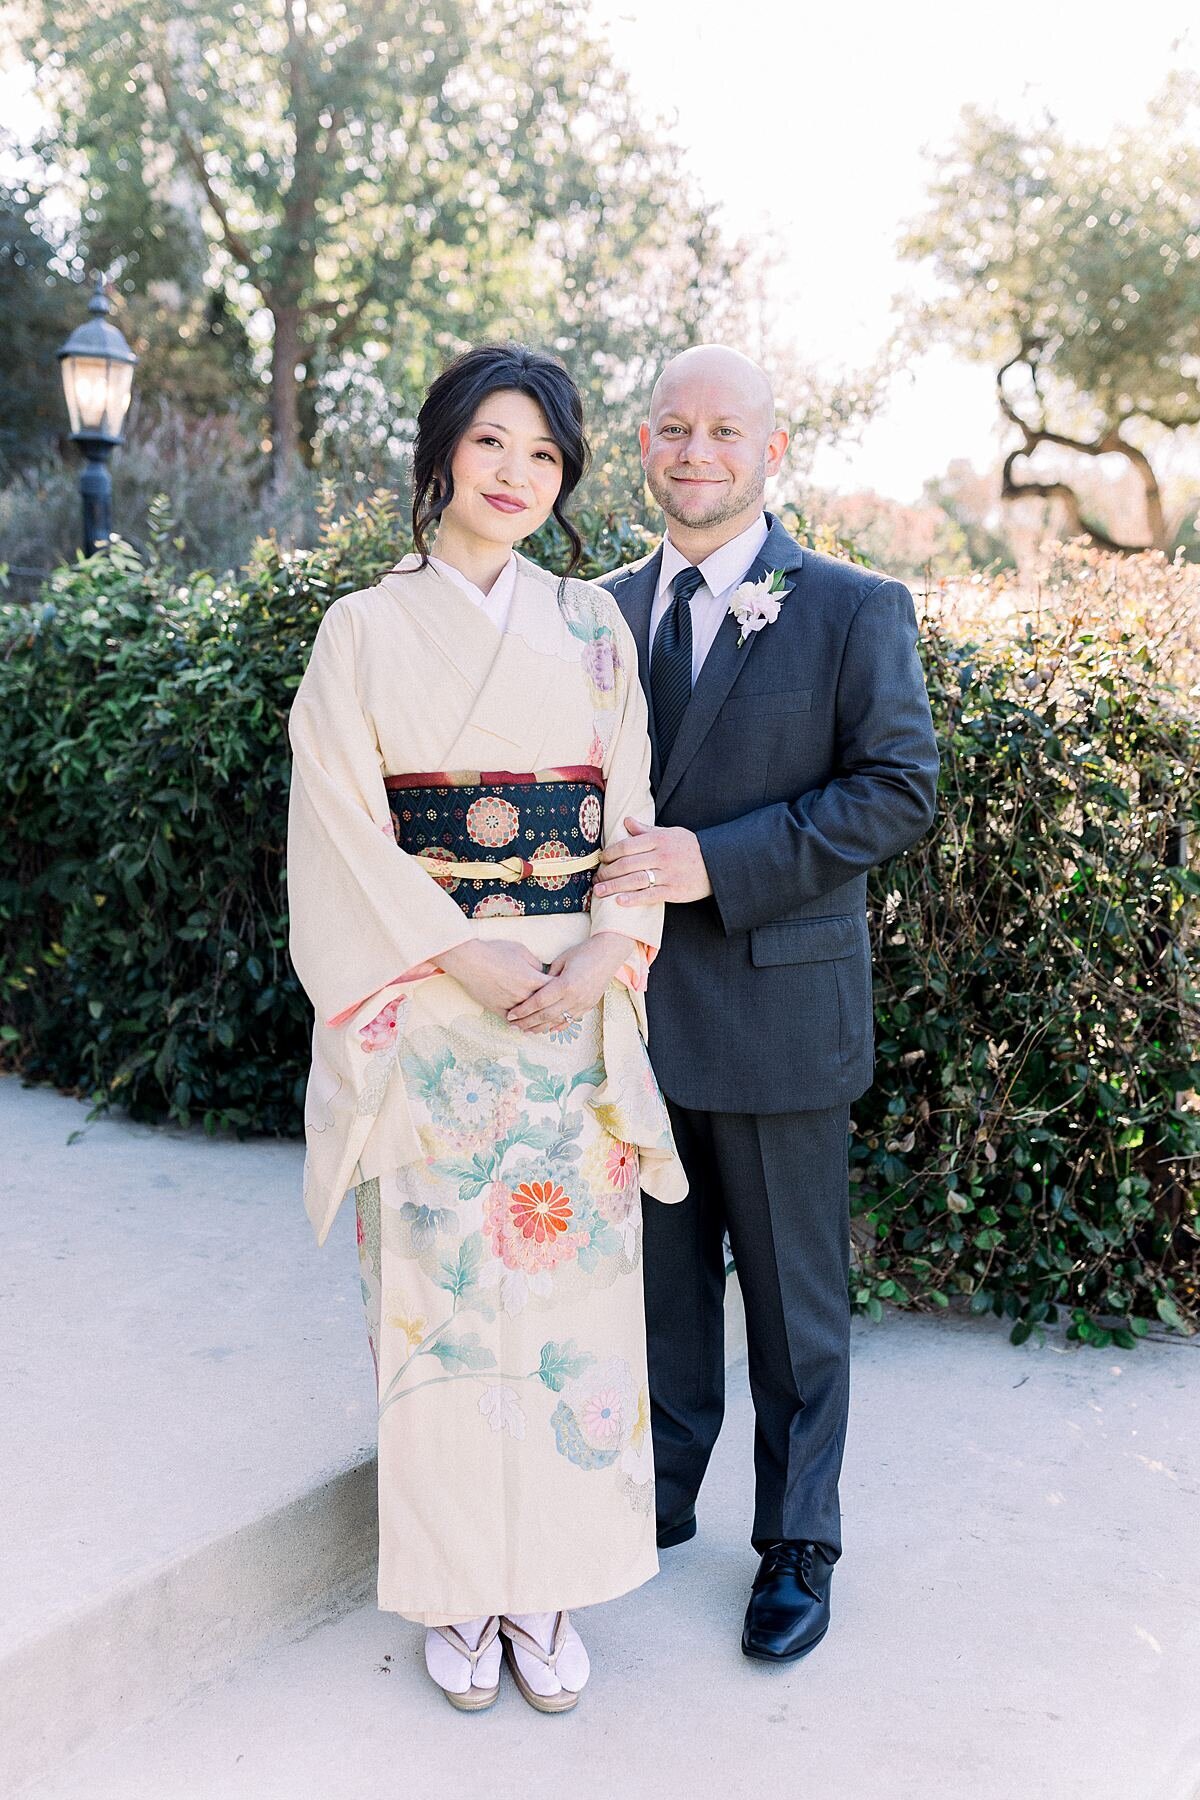 Anna-Wright-Photography-Cherry-Blossom-Photographer-Japanese-Jewish-Wedding_0719